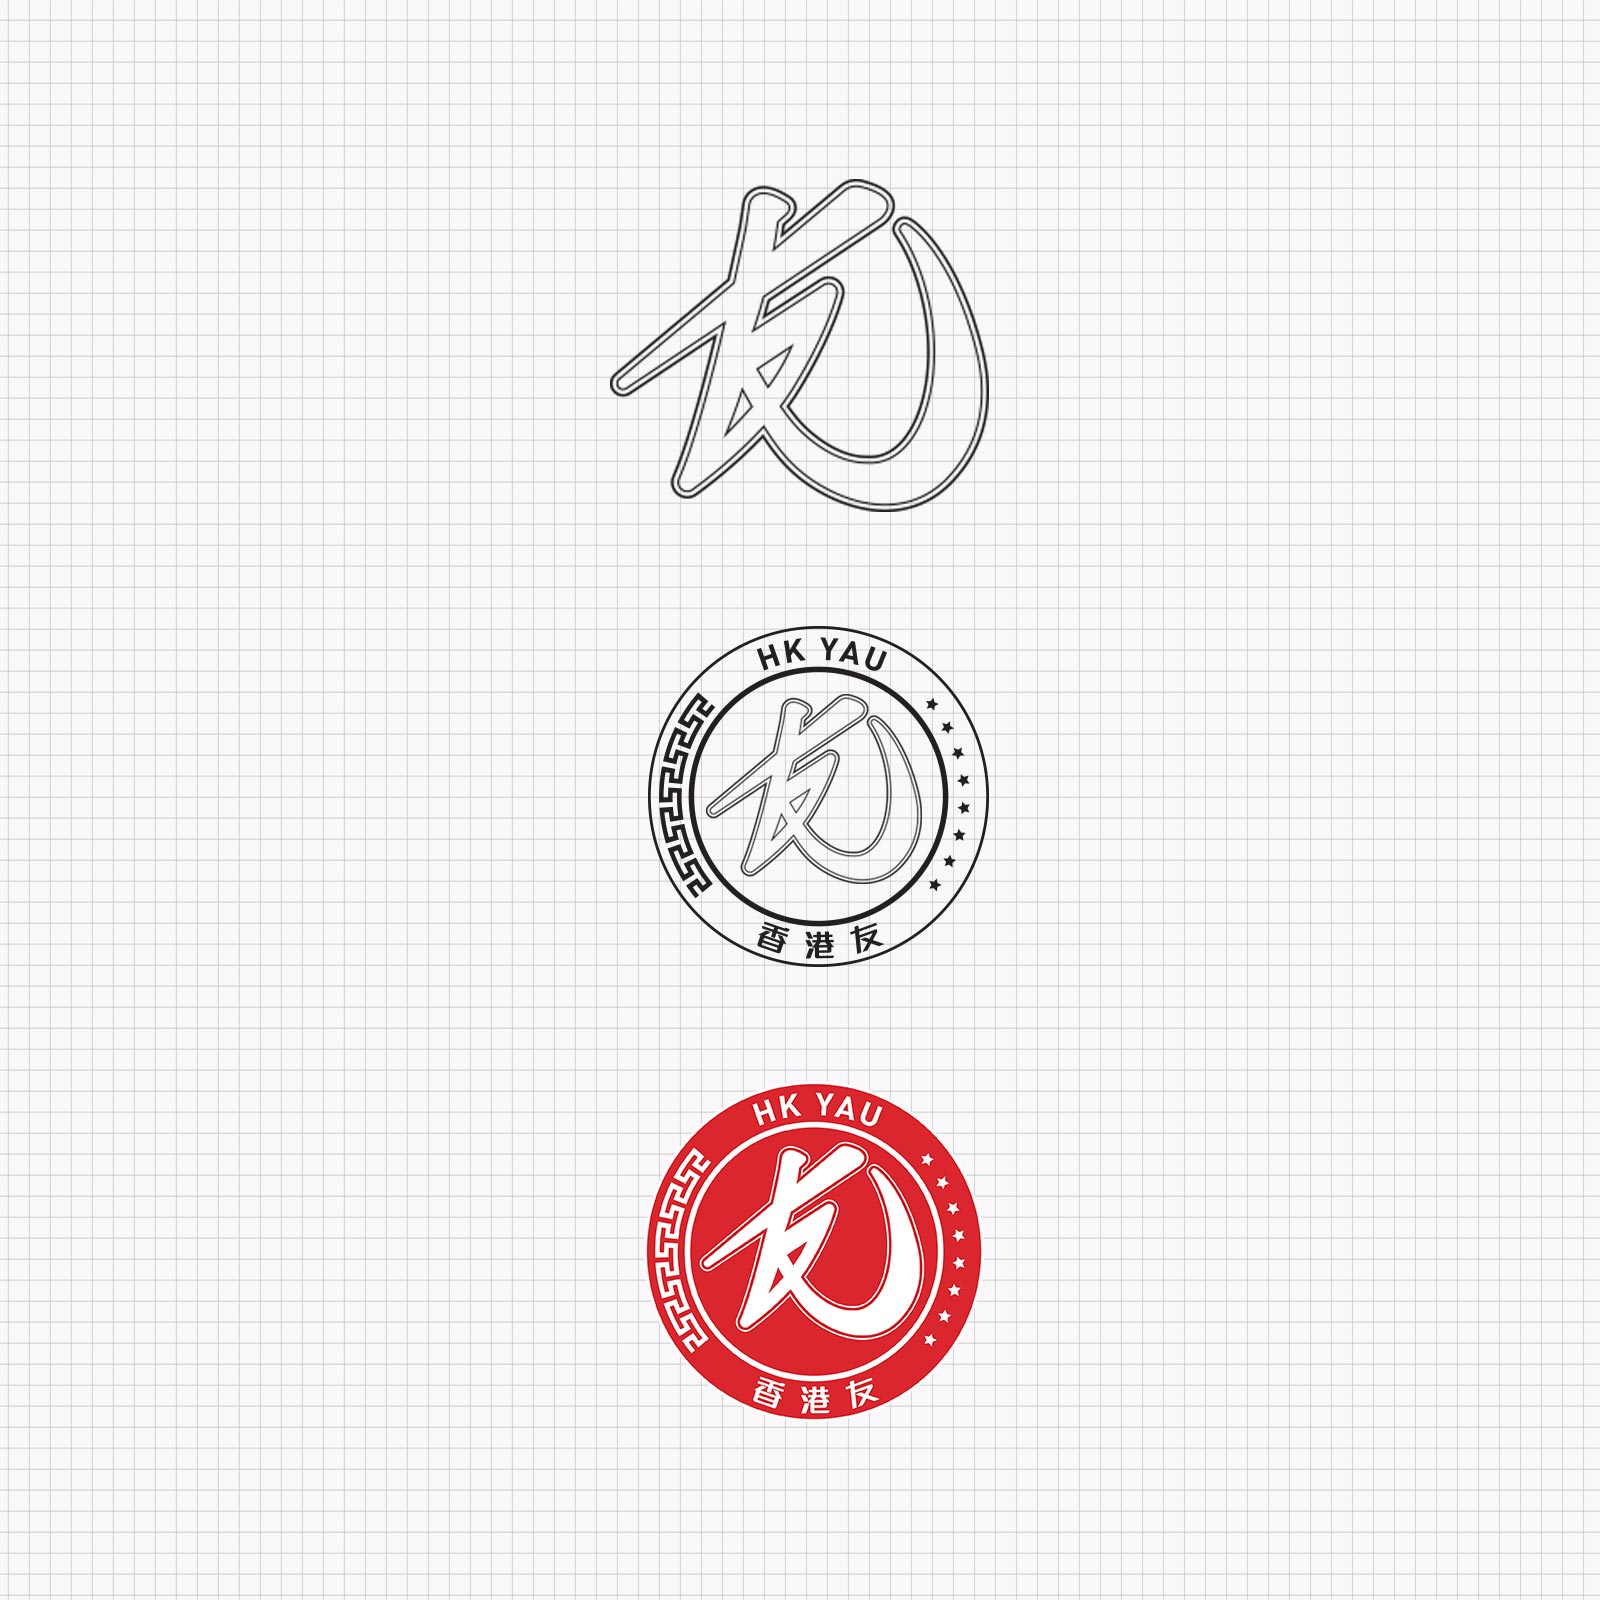 HK YAU branding logo development on grid